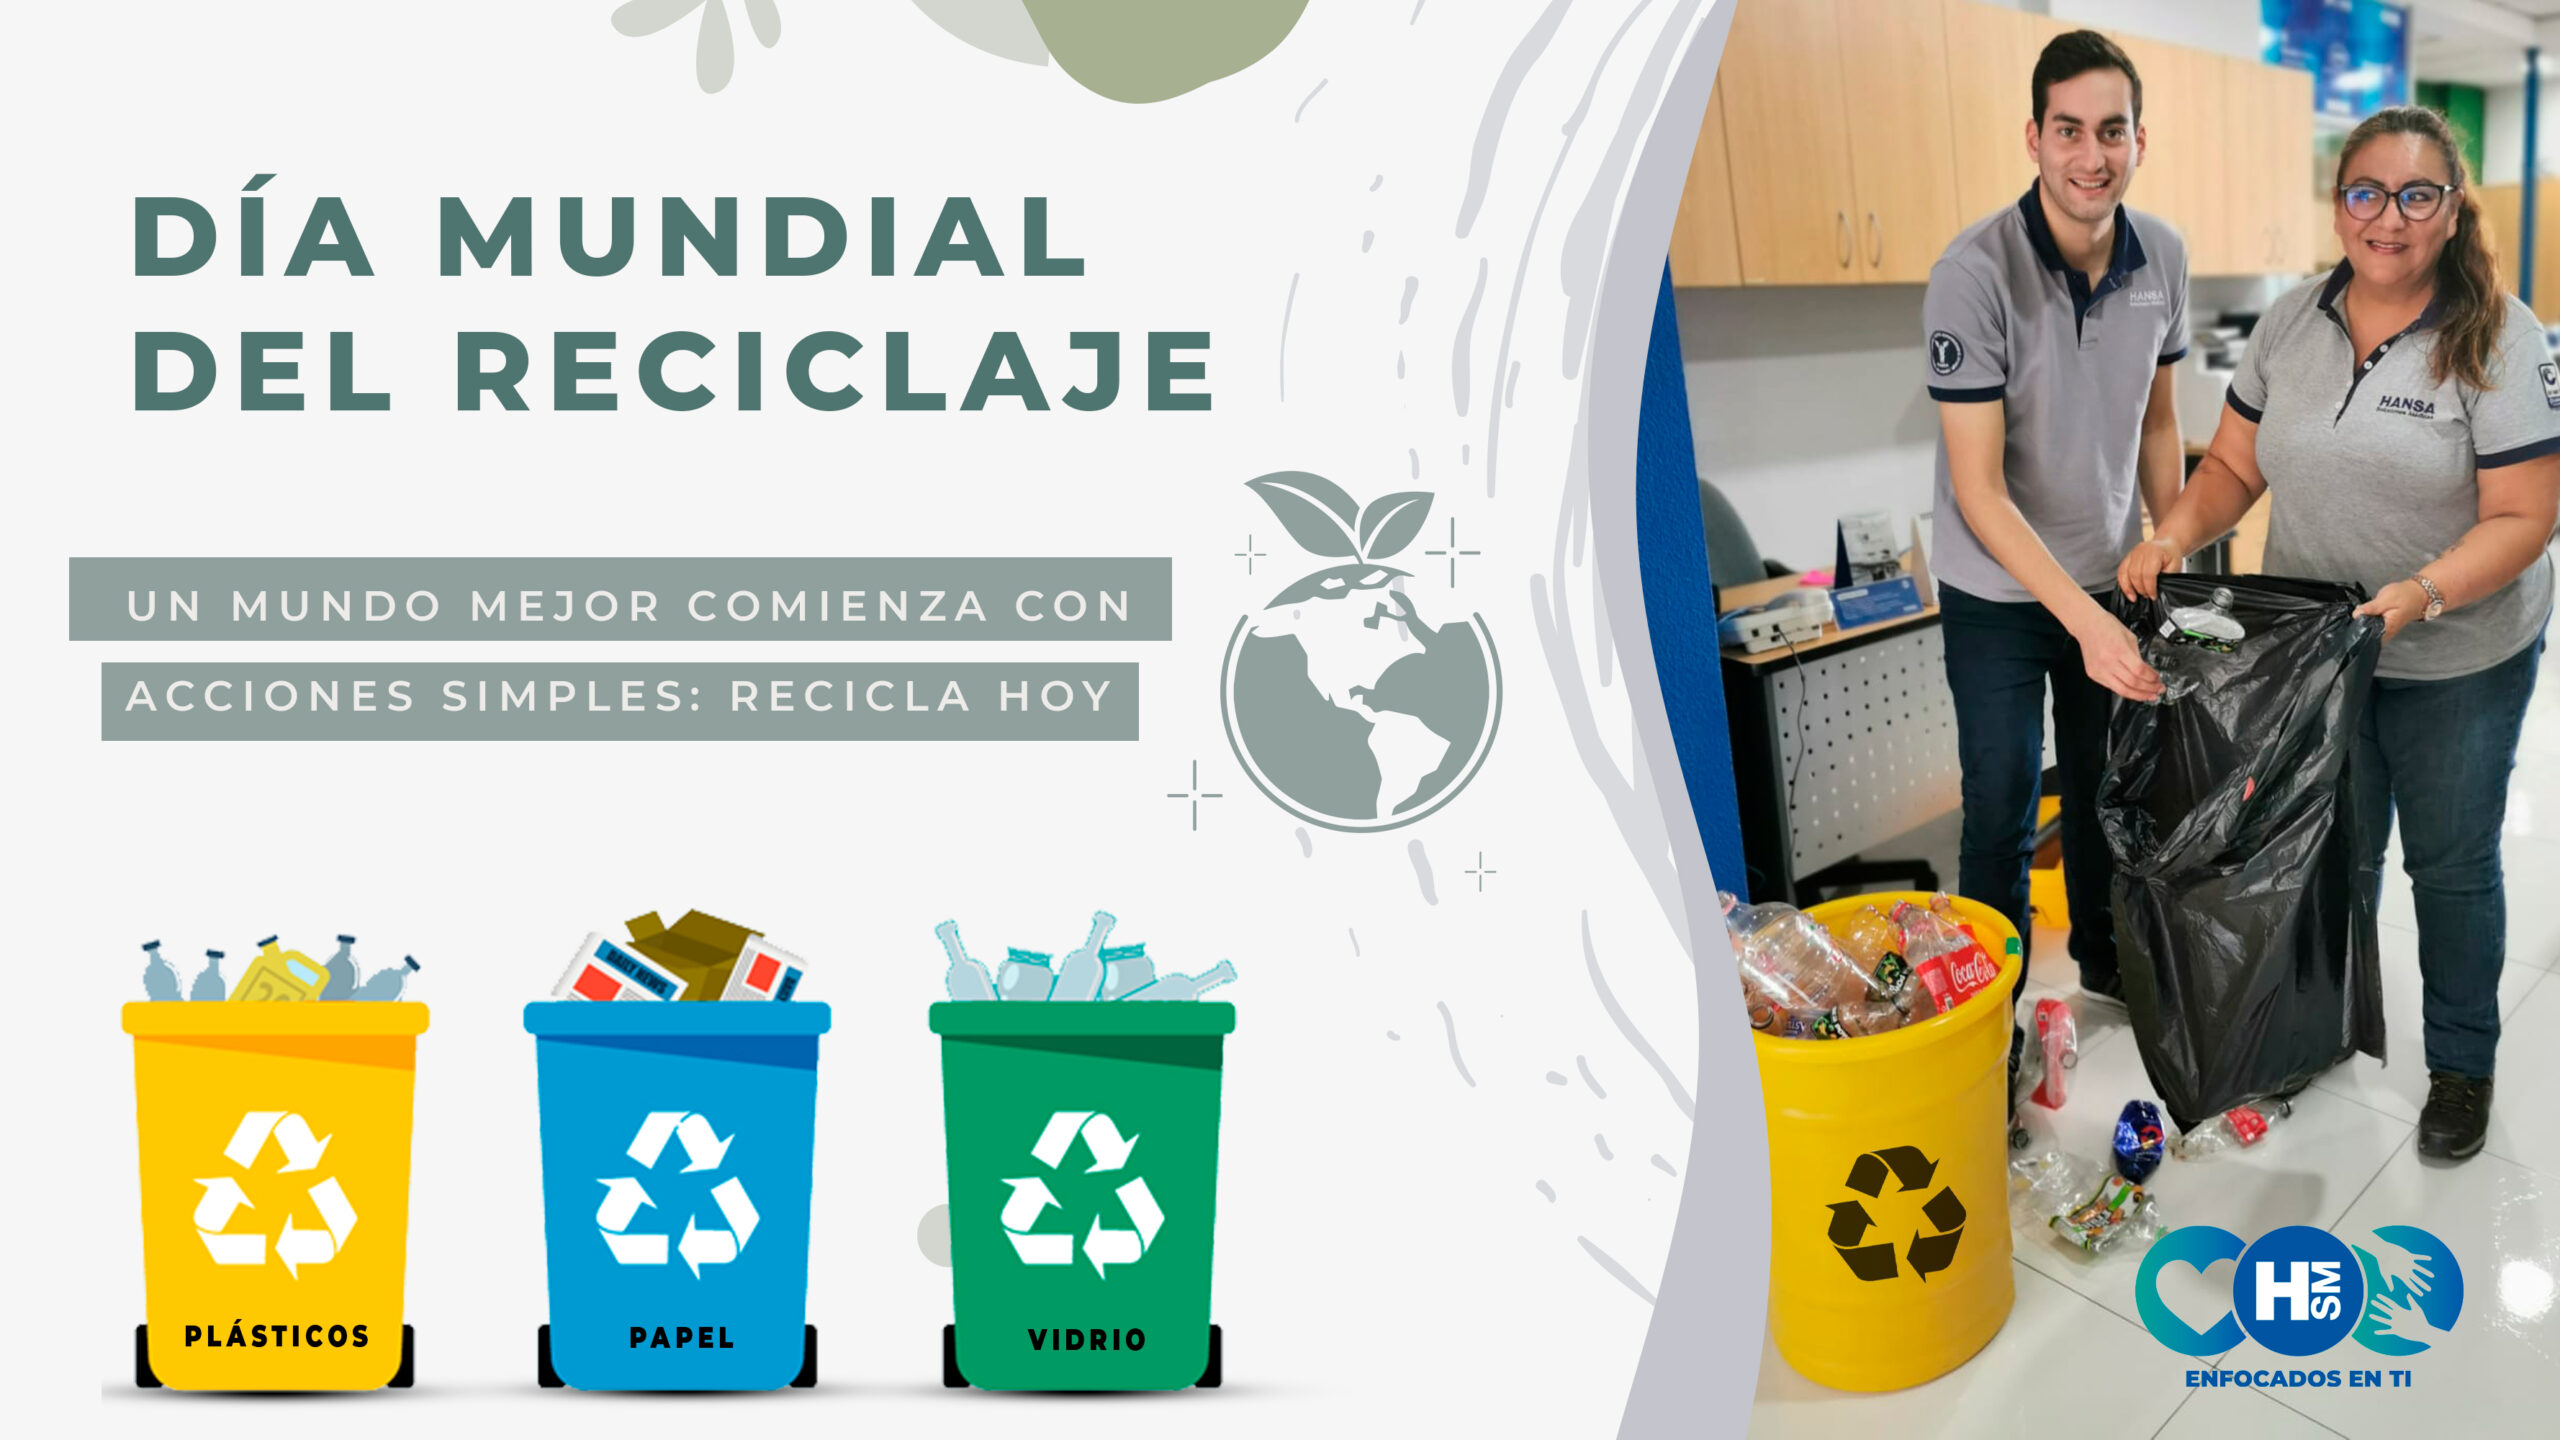 Dia mundial del reciclaje scaled